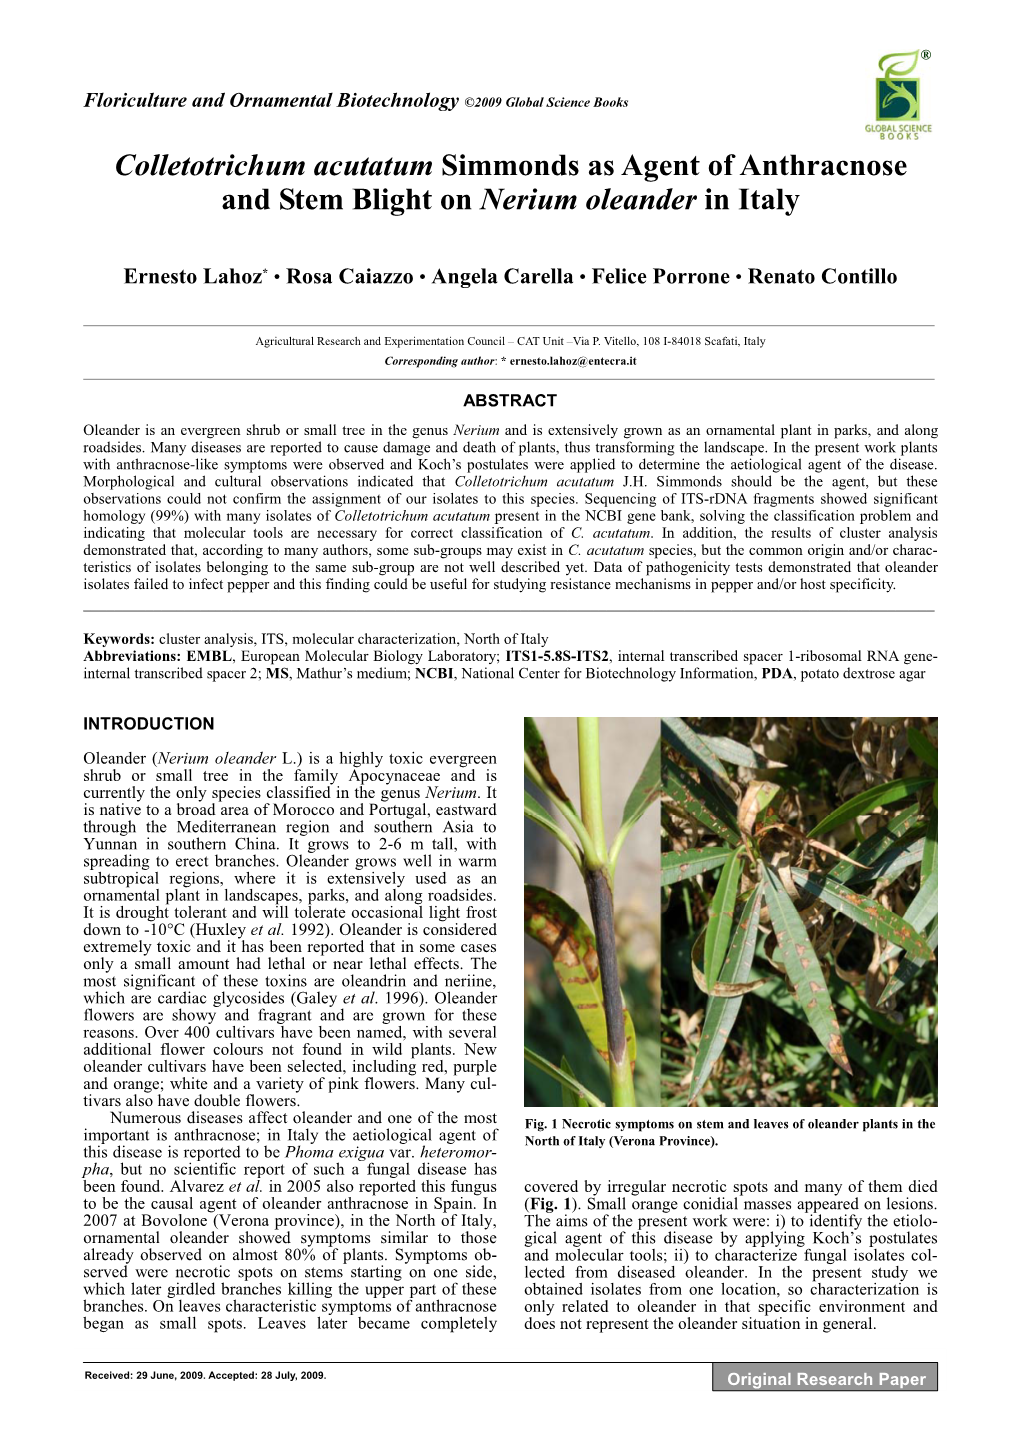 Colletotrichum Acutatum Simmonds As Agent of Anthracnose and Stem Blight on Nerium Oleander in Italy